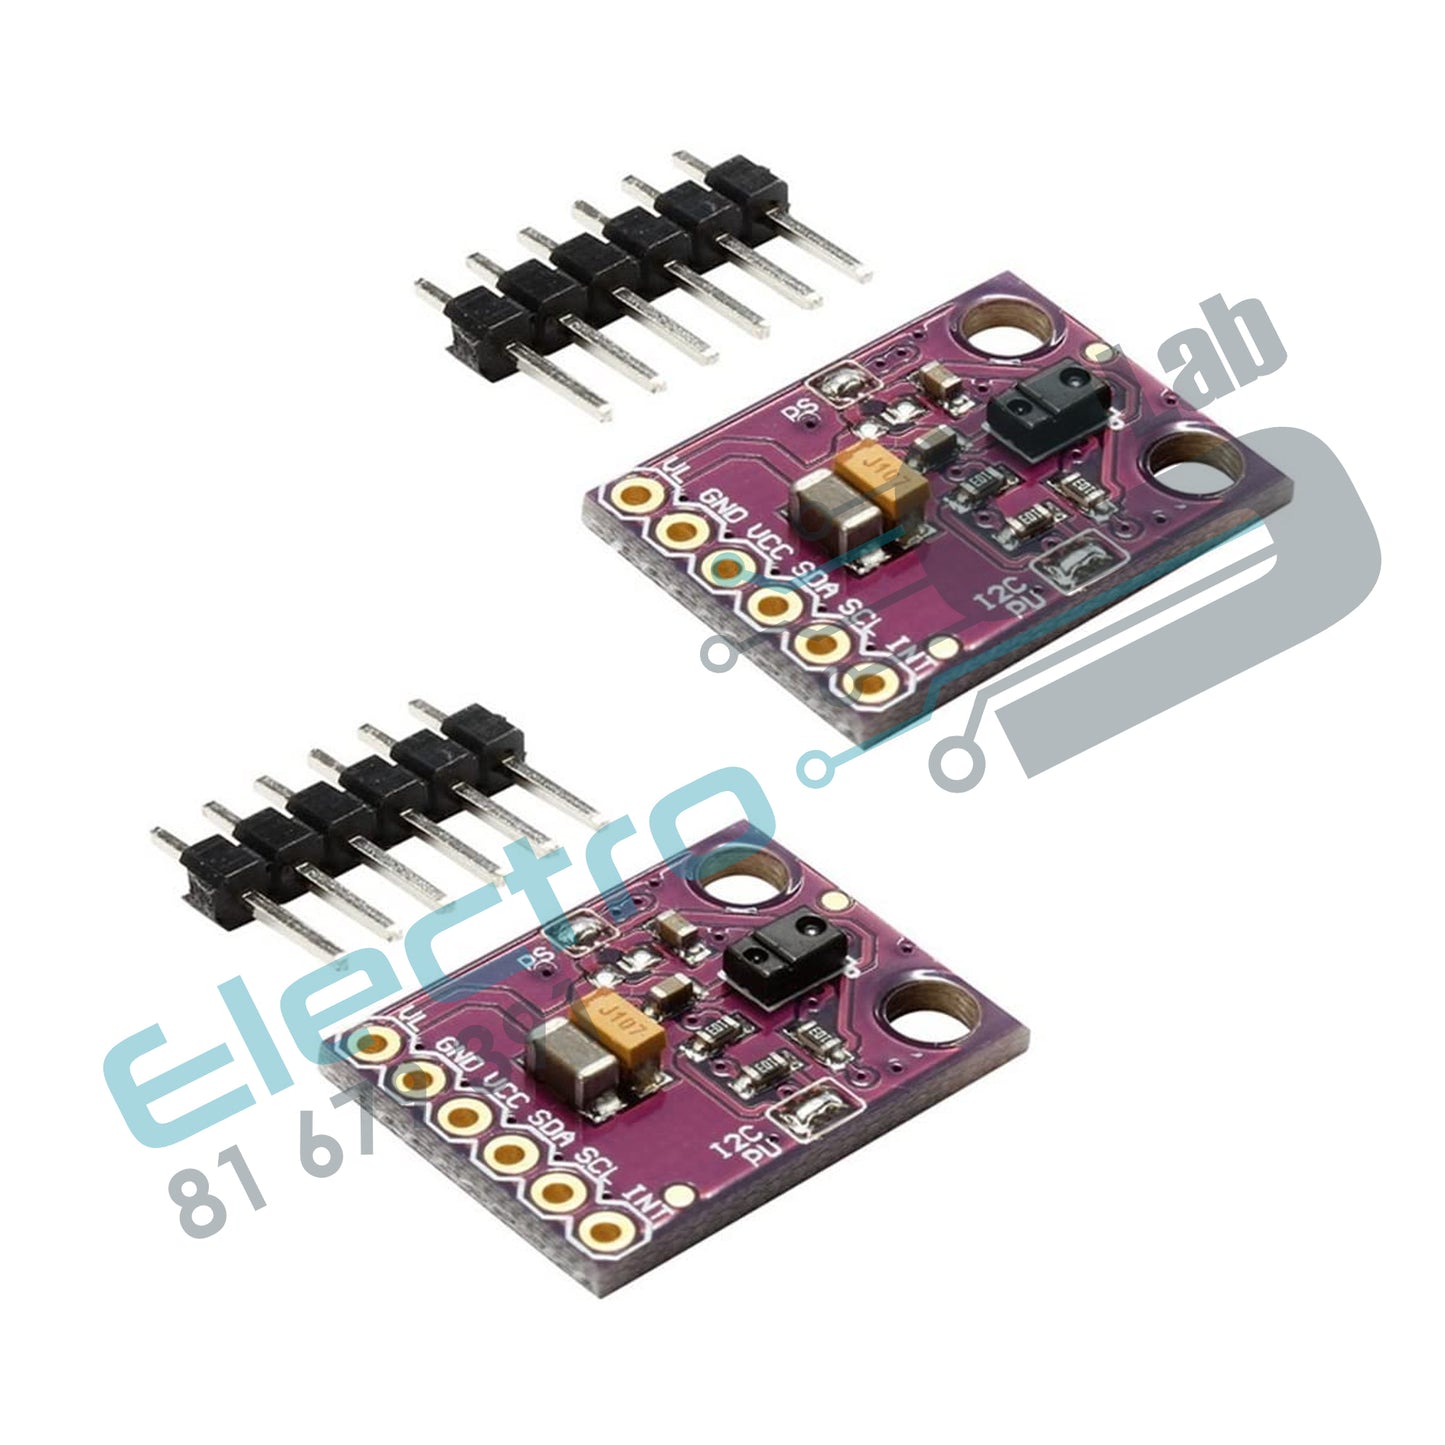 APDS-9960 Proximity And Gesture RGB  Sensor